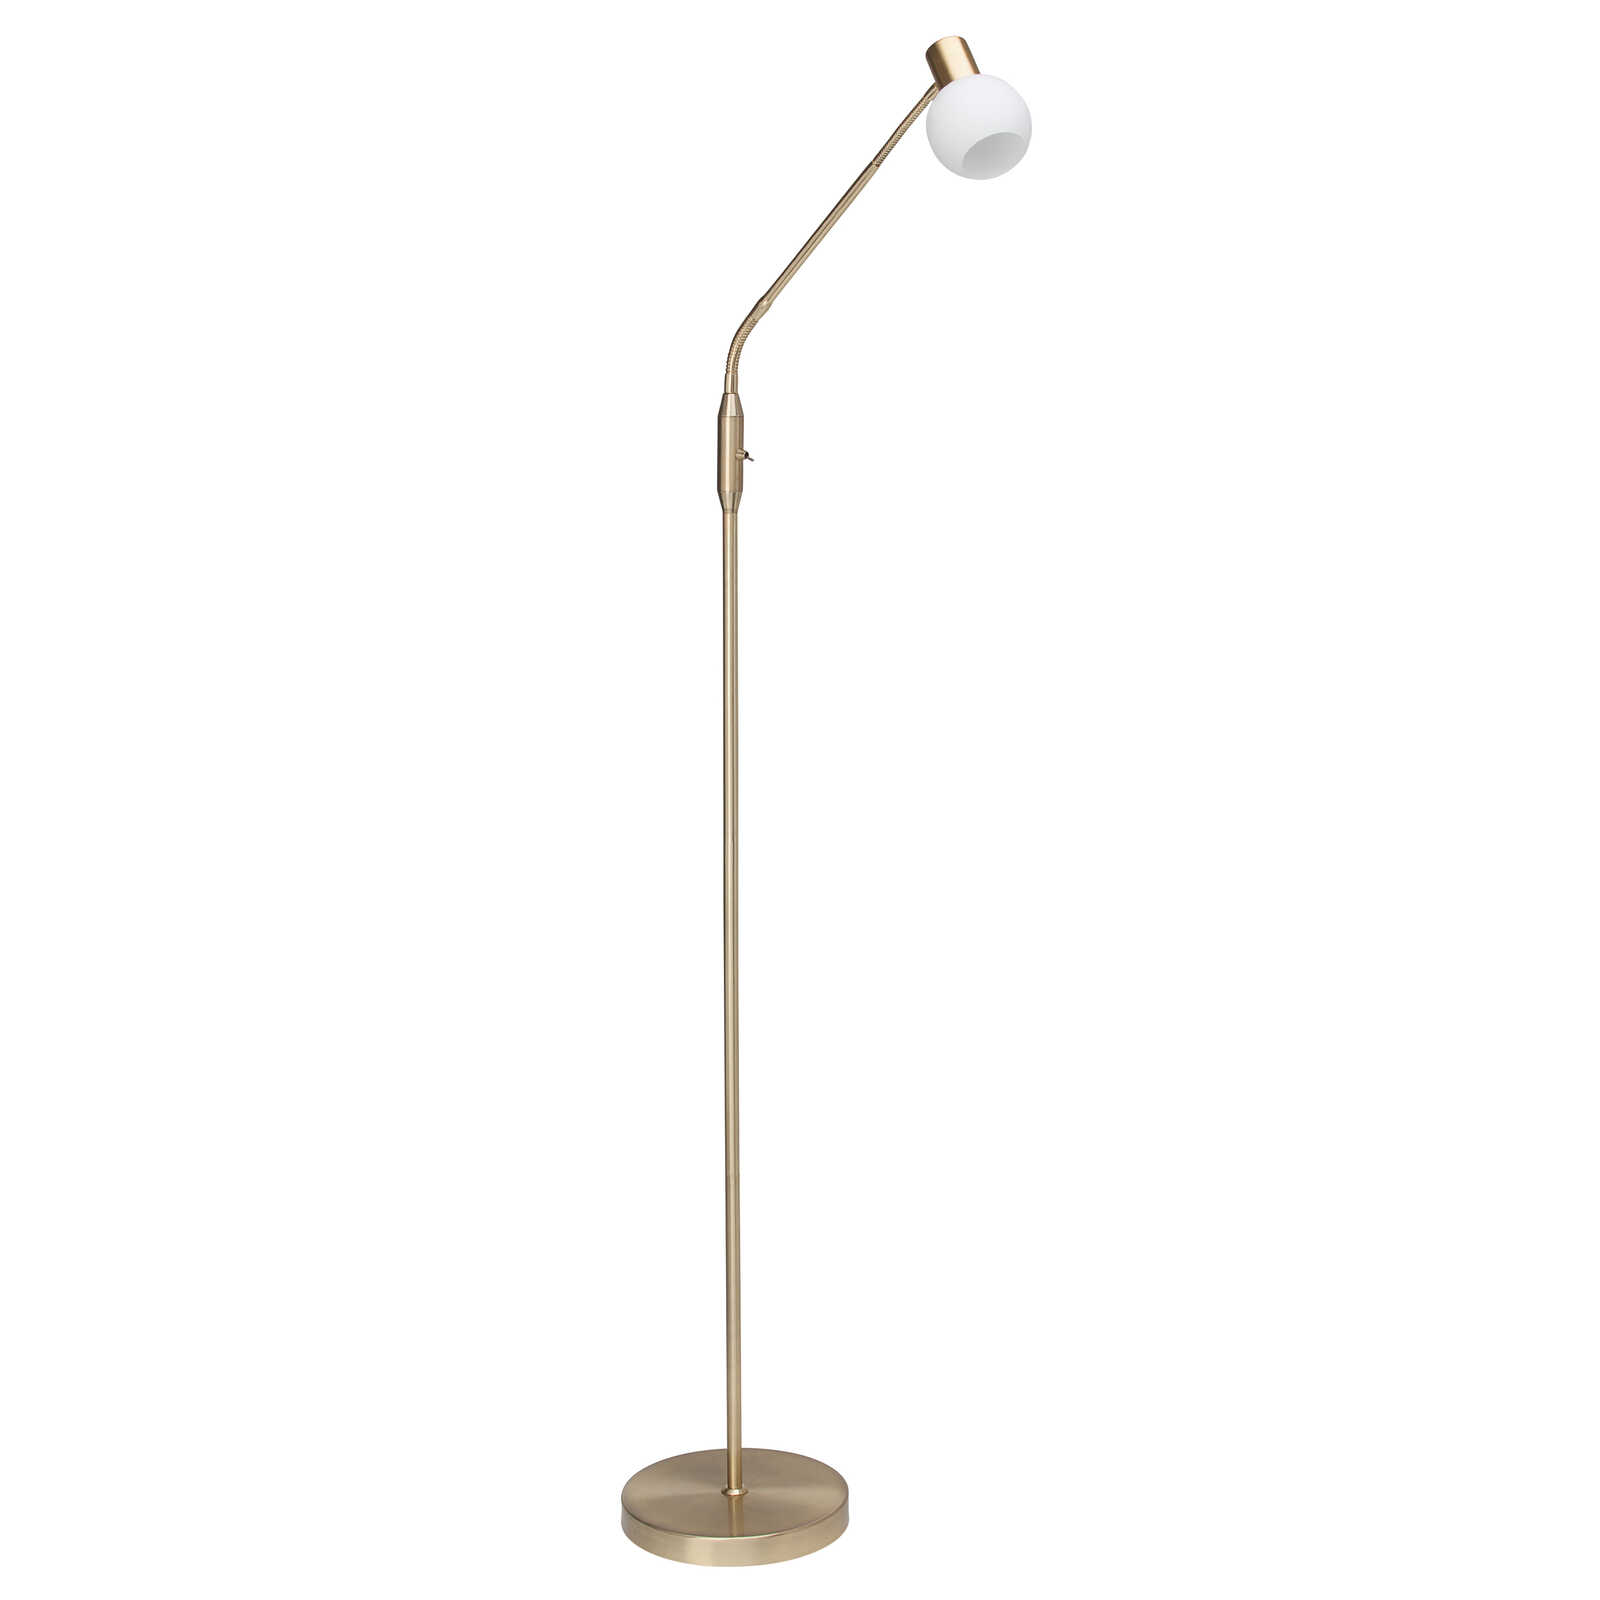             Glass floor lamp - Malou 2 - Gold
        